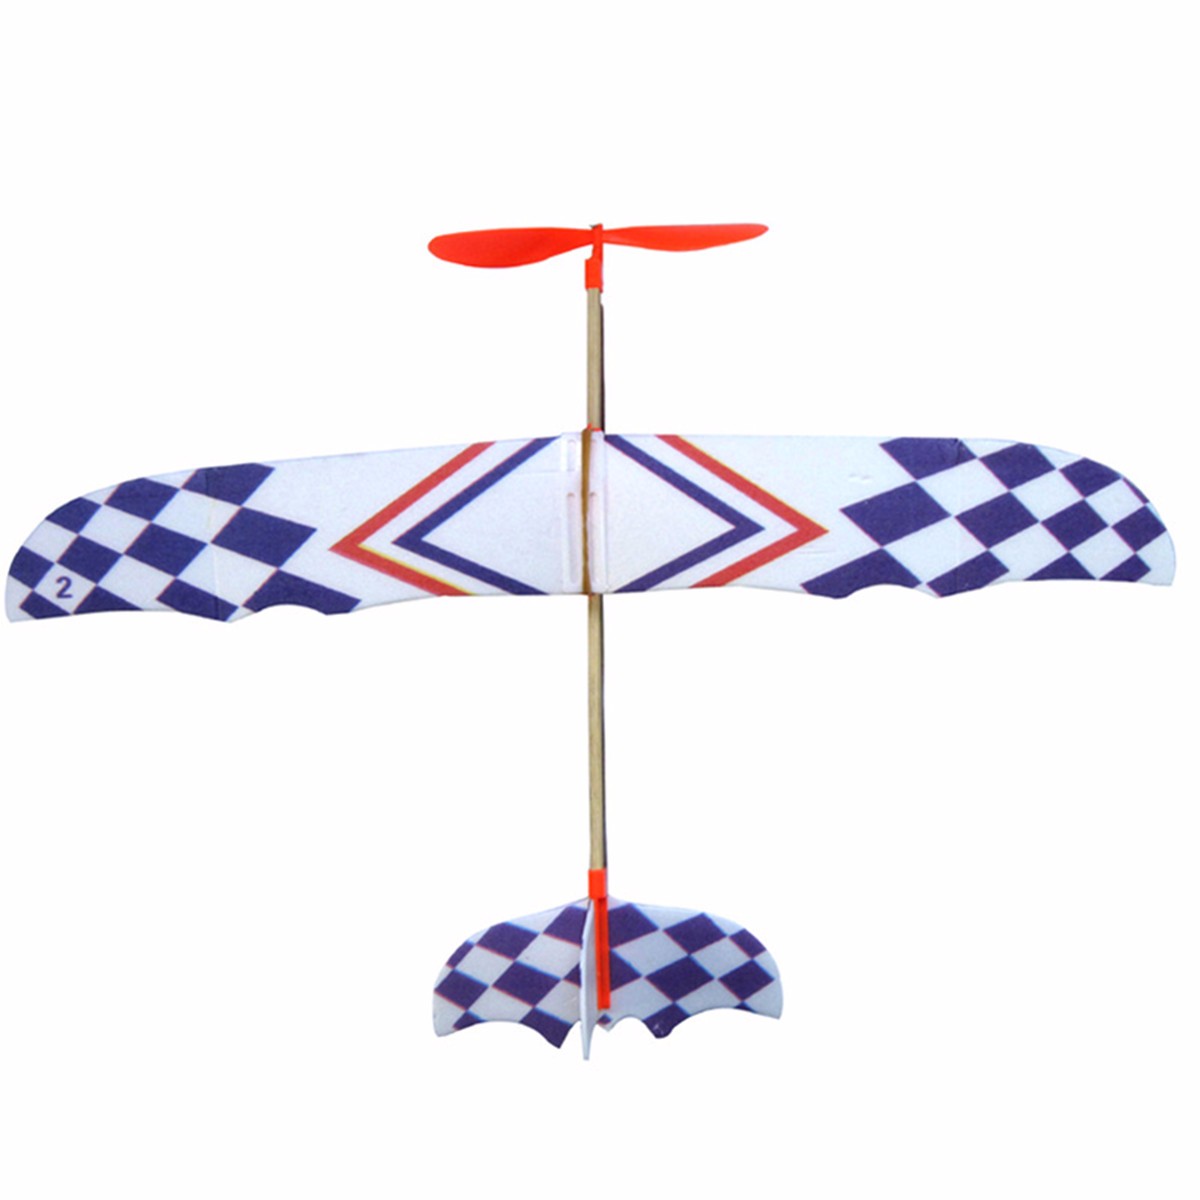 Elastic-Rubber-Band-Powered-DIY-Foam-Plane-Kit-Aircraft-Model-Educational-Toy-1120805